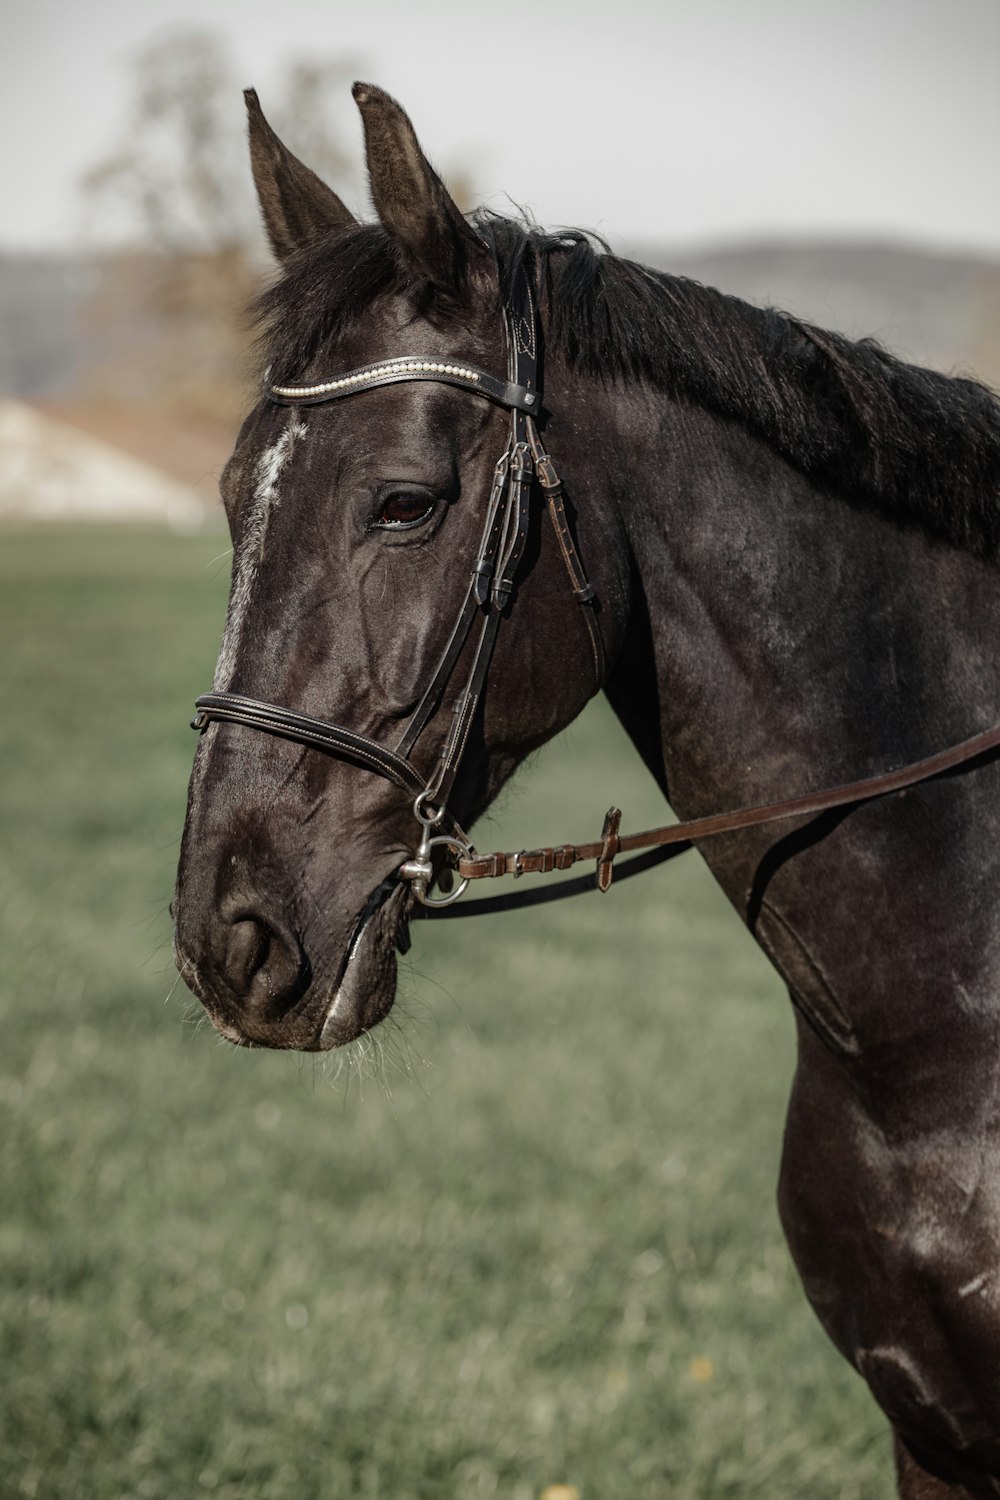 Black Horses Pictures  Download Free Images on Unsplash